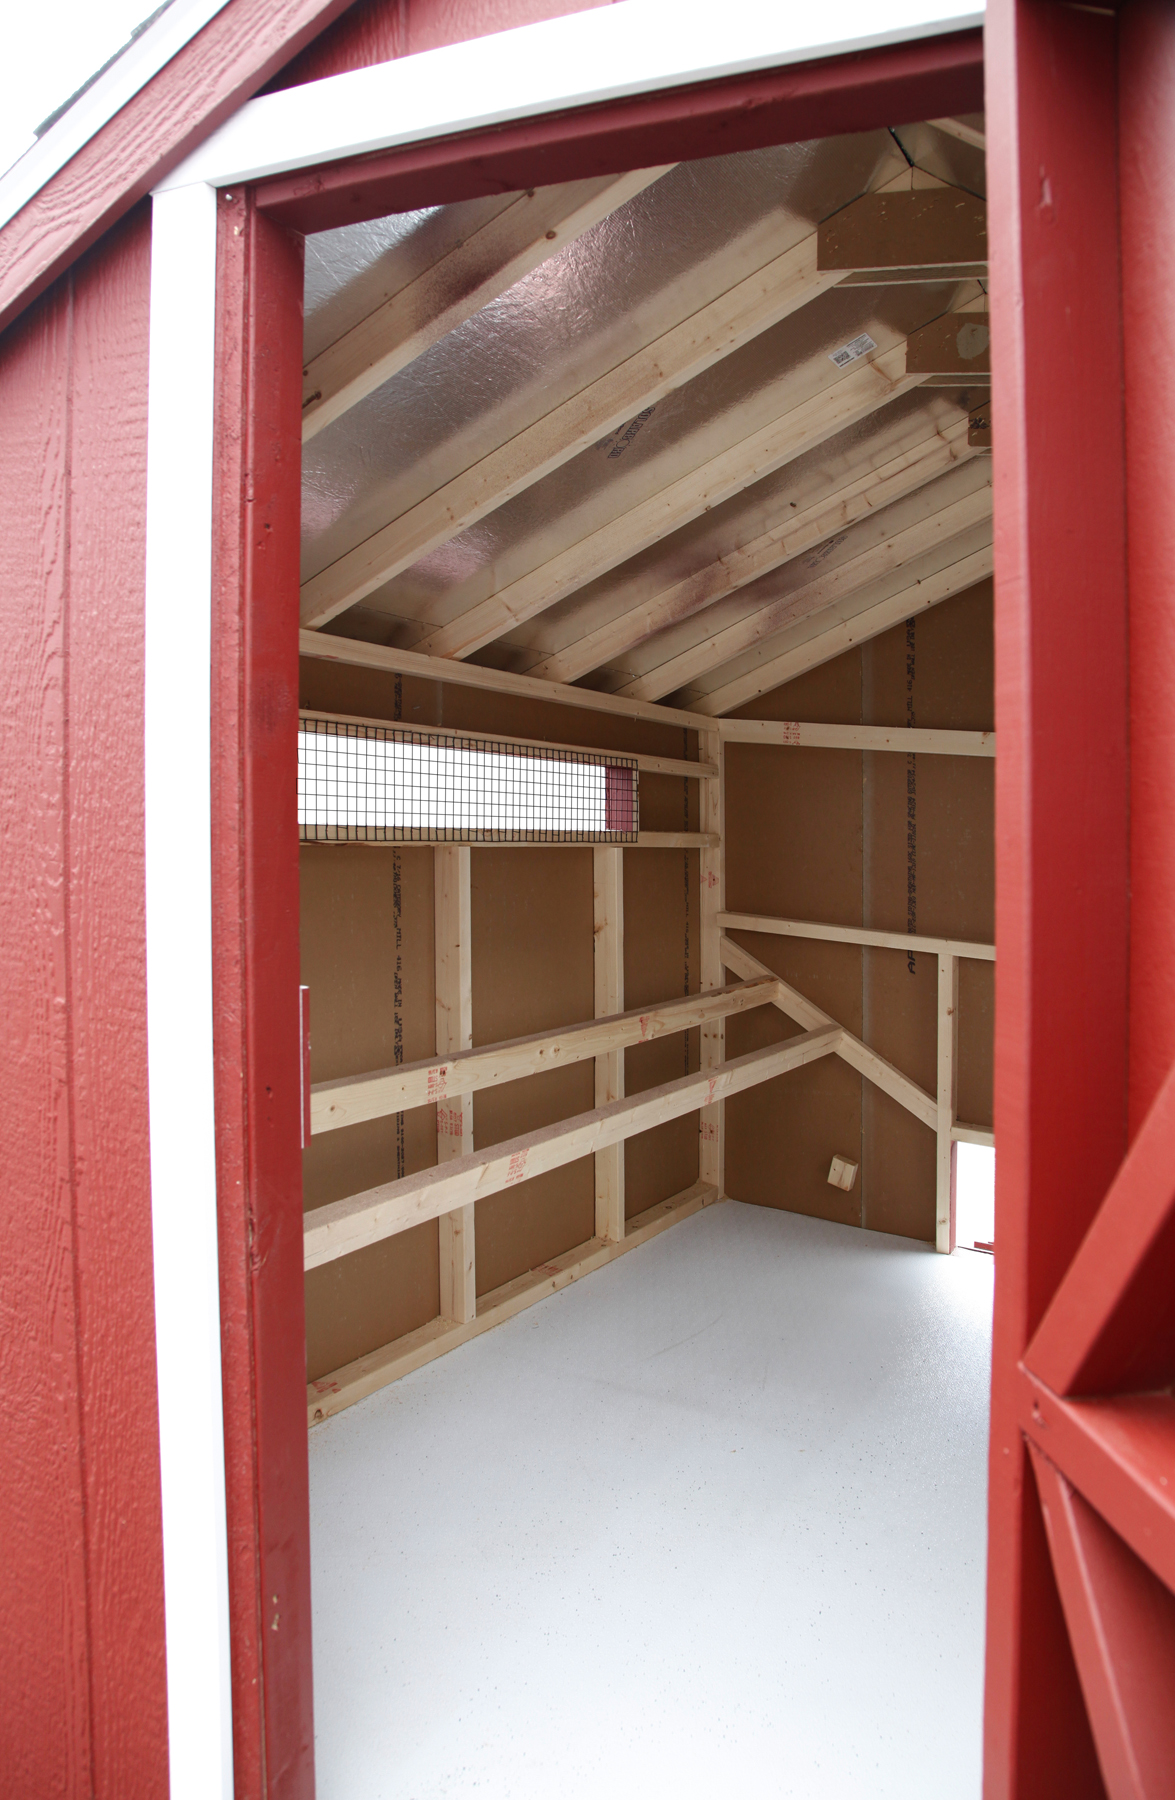 Interior of a 5x8 Quaker chicken coop